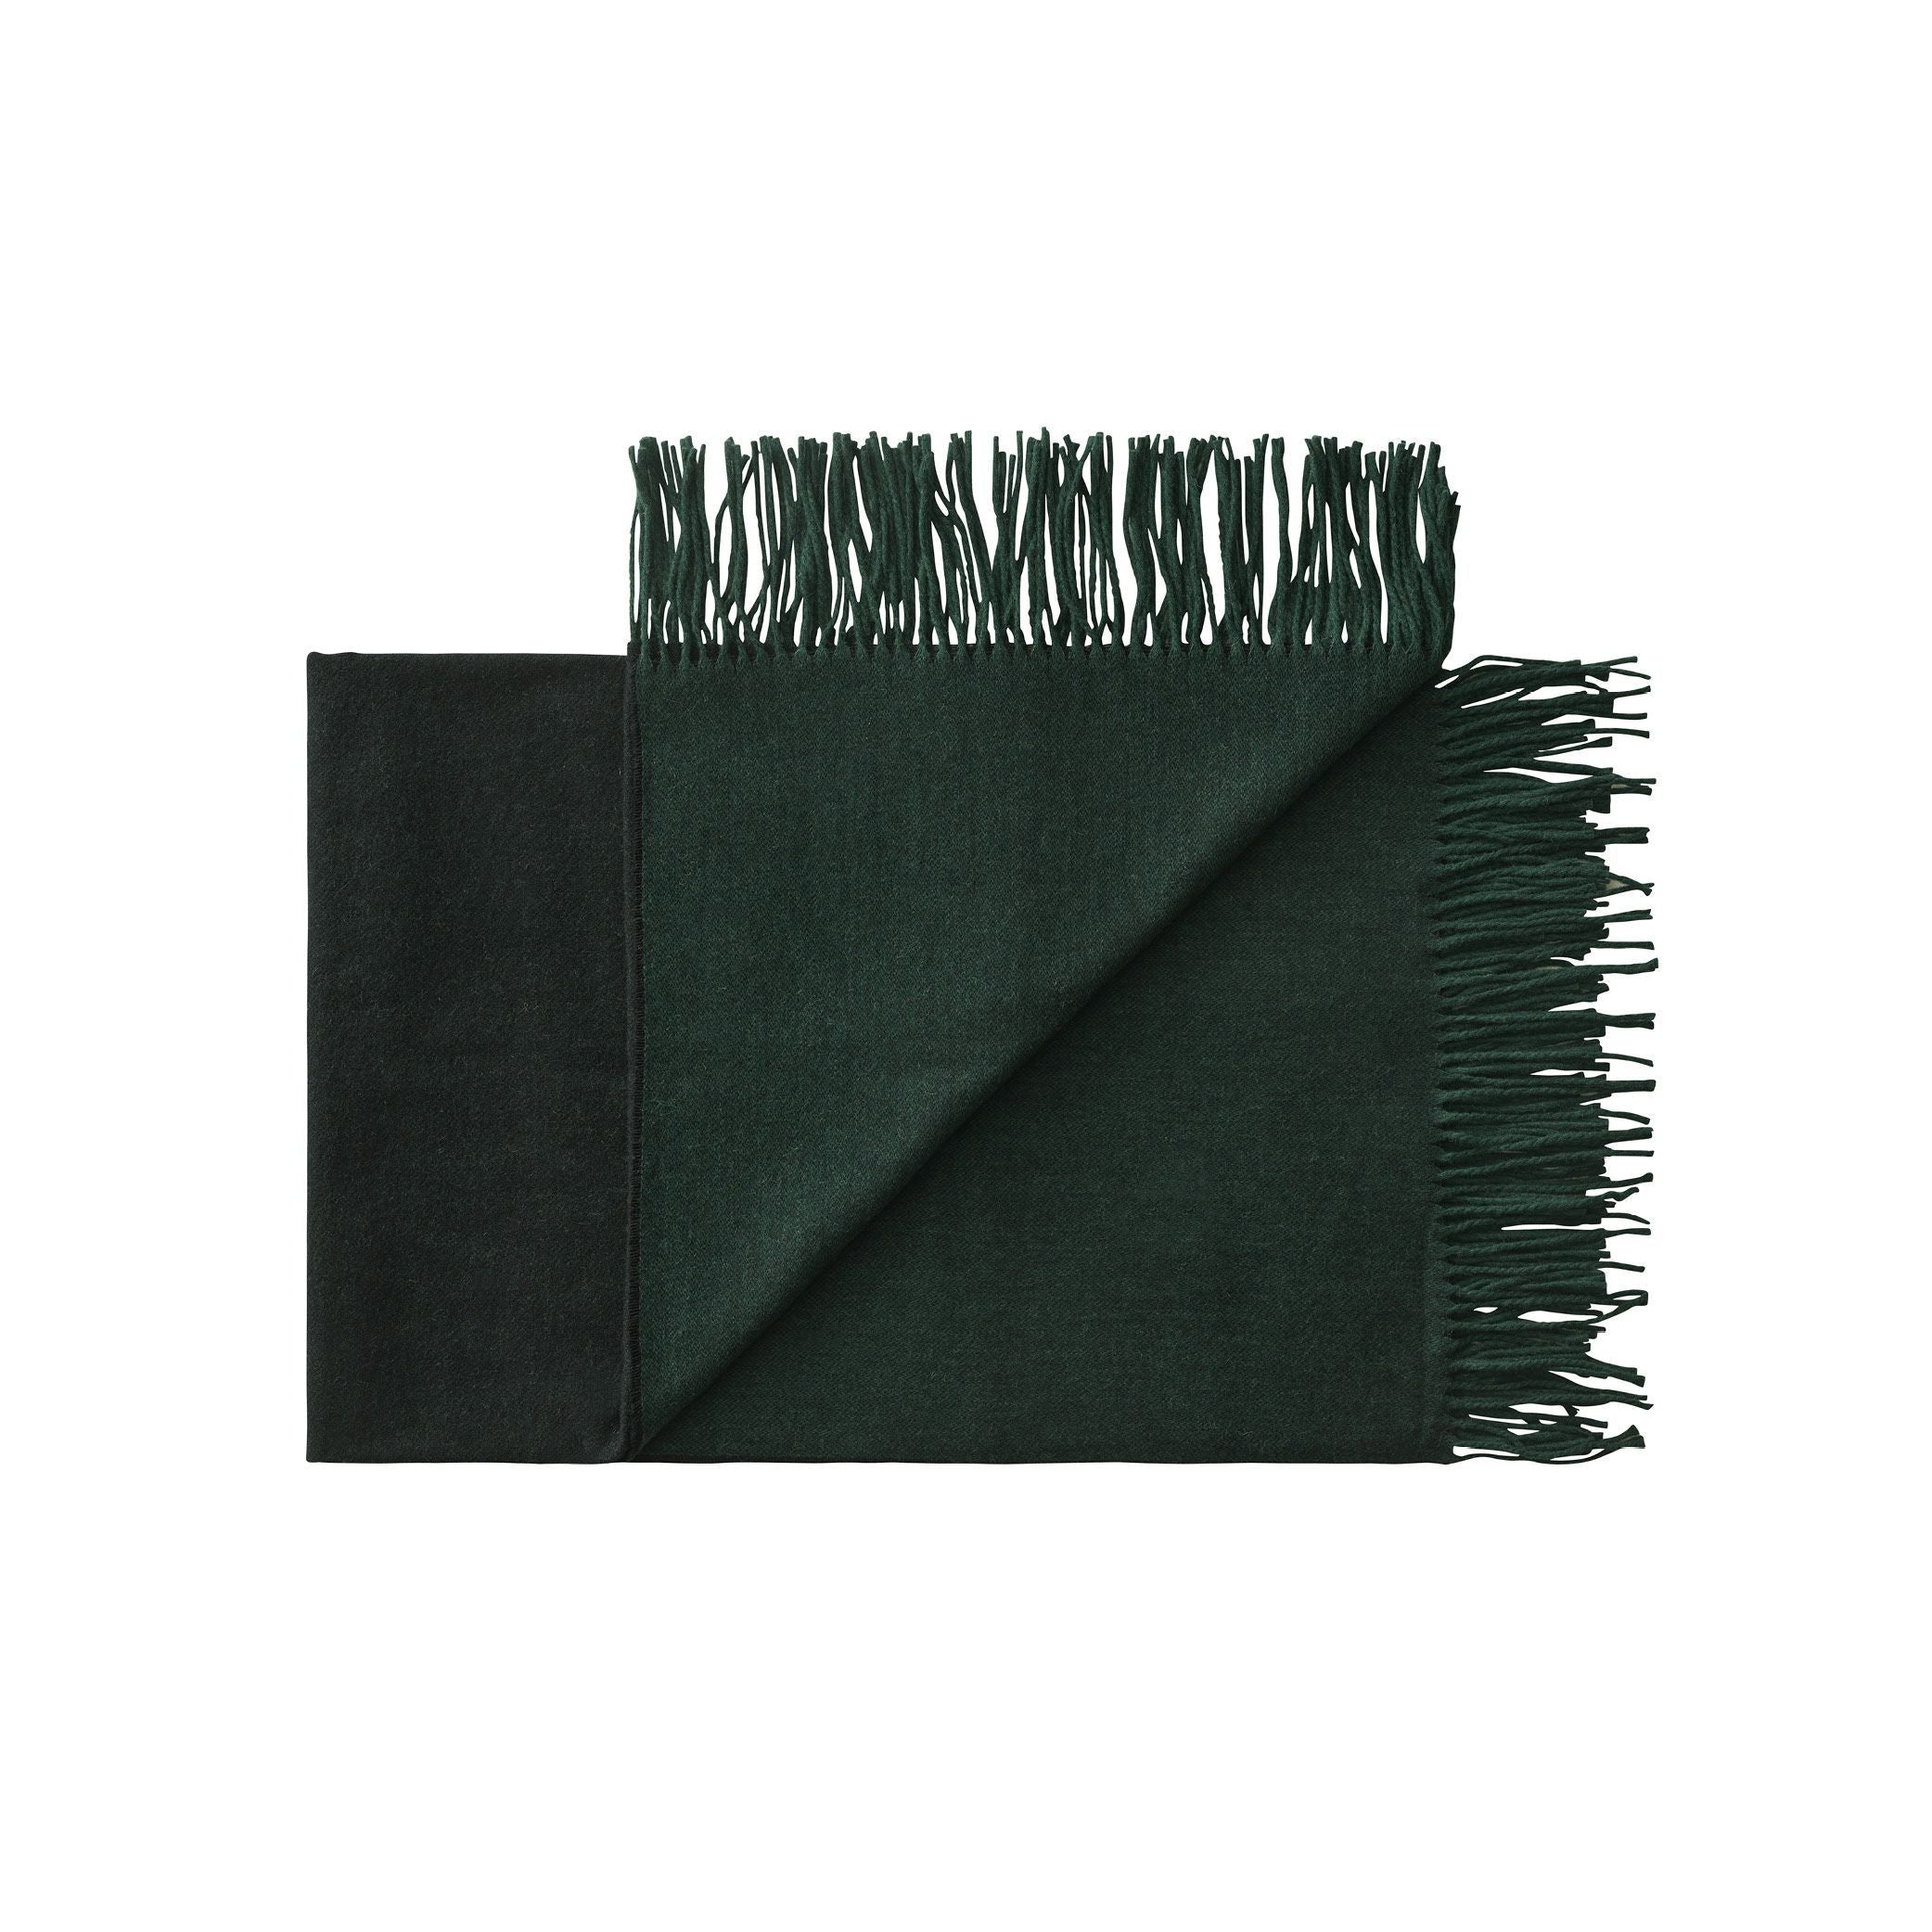 Silkeborg Uldspinderi Franja Throw 170x140 cm, vert / noir